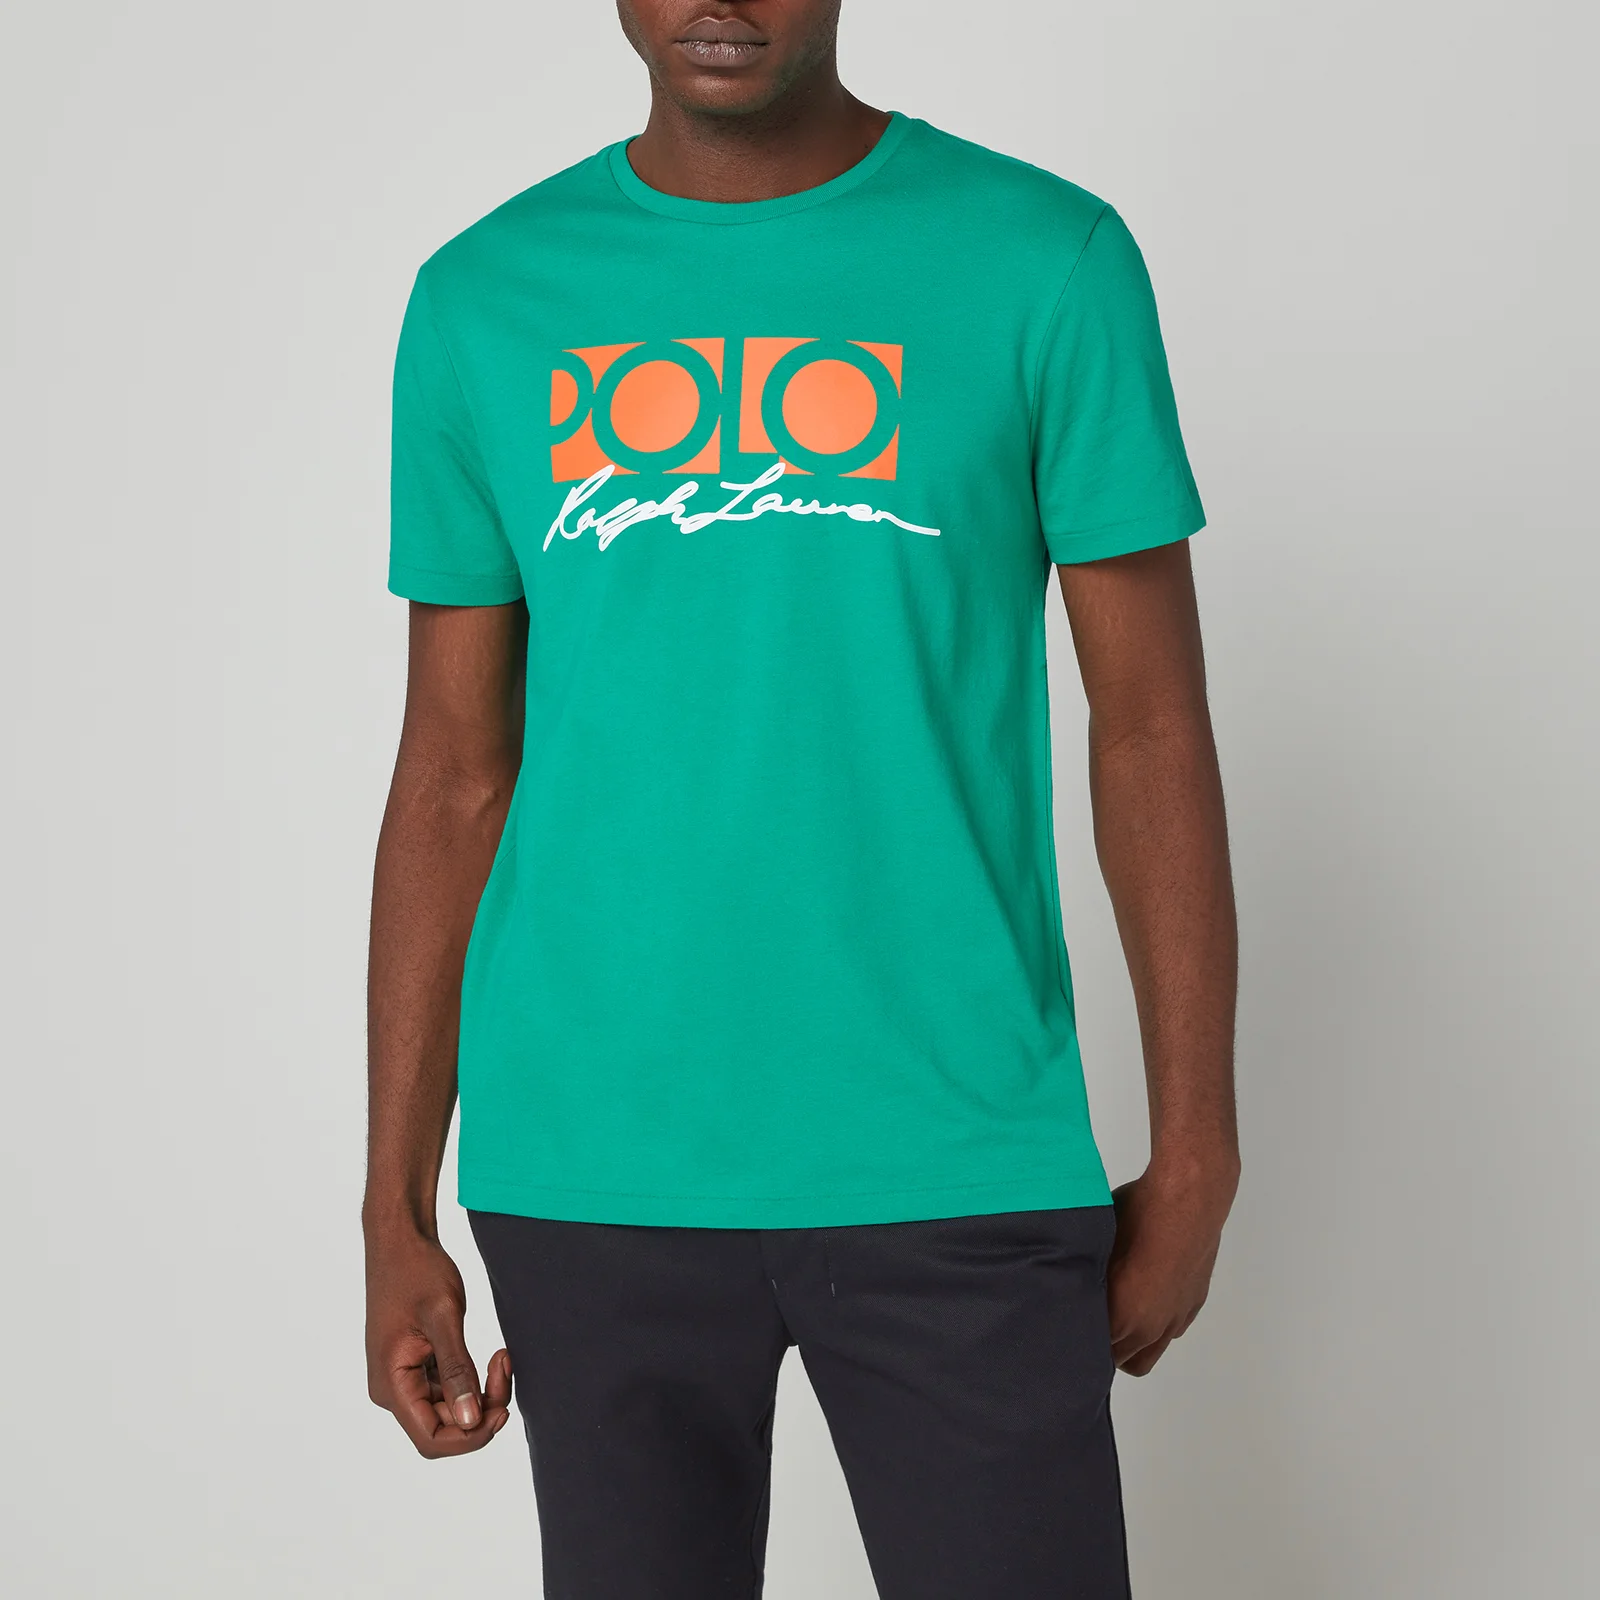 Polo Ralph Lauren Men's Polo Logo T-Shirt - True Green Image 1